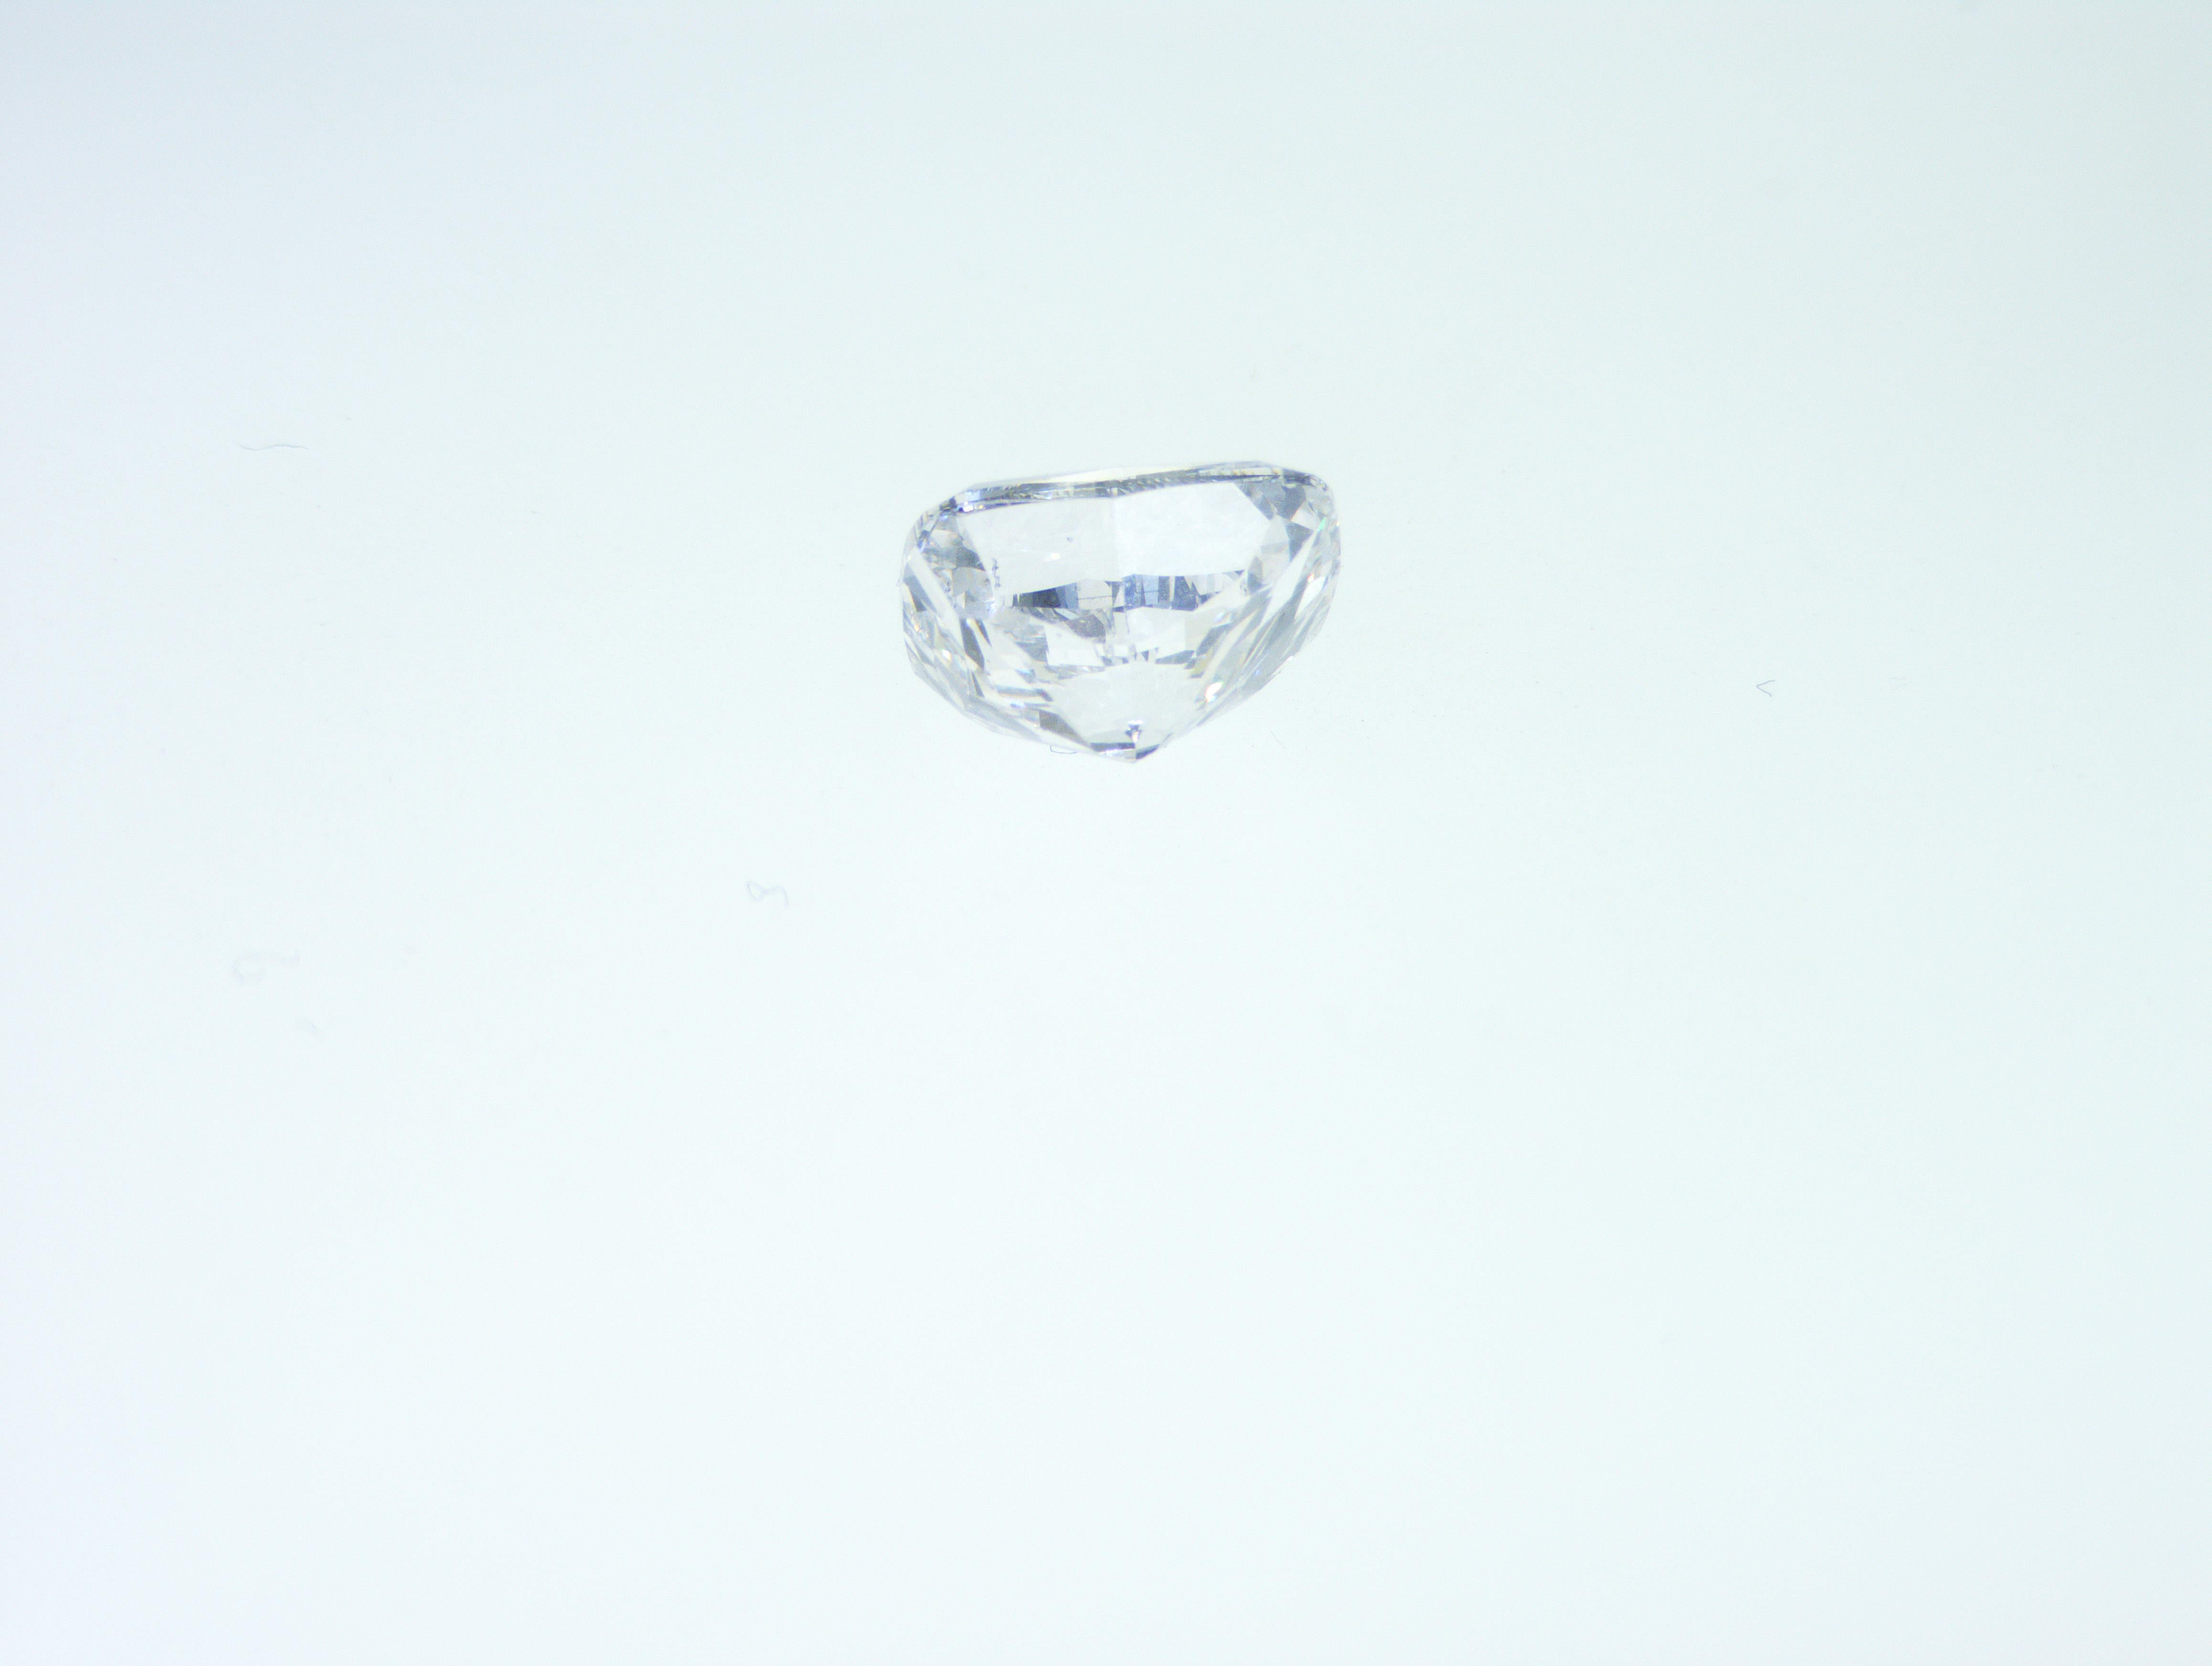 Cushion Cut HRDAntwerp certified 3.00 carat E colour (exceptional white) Diamond